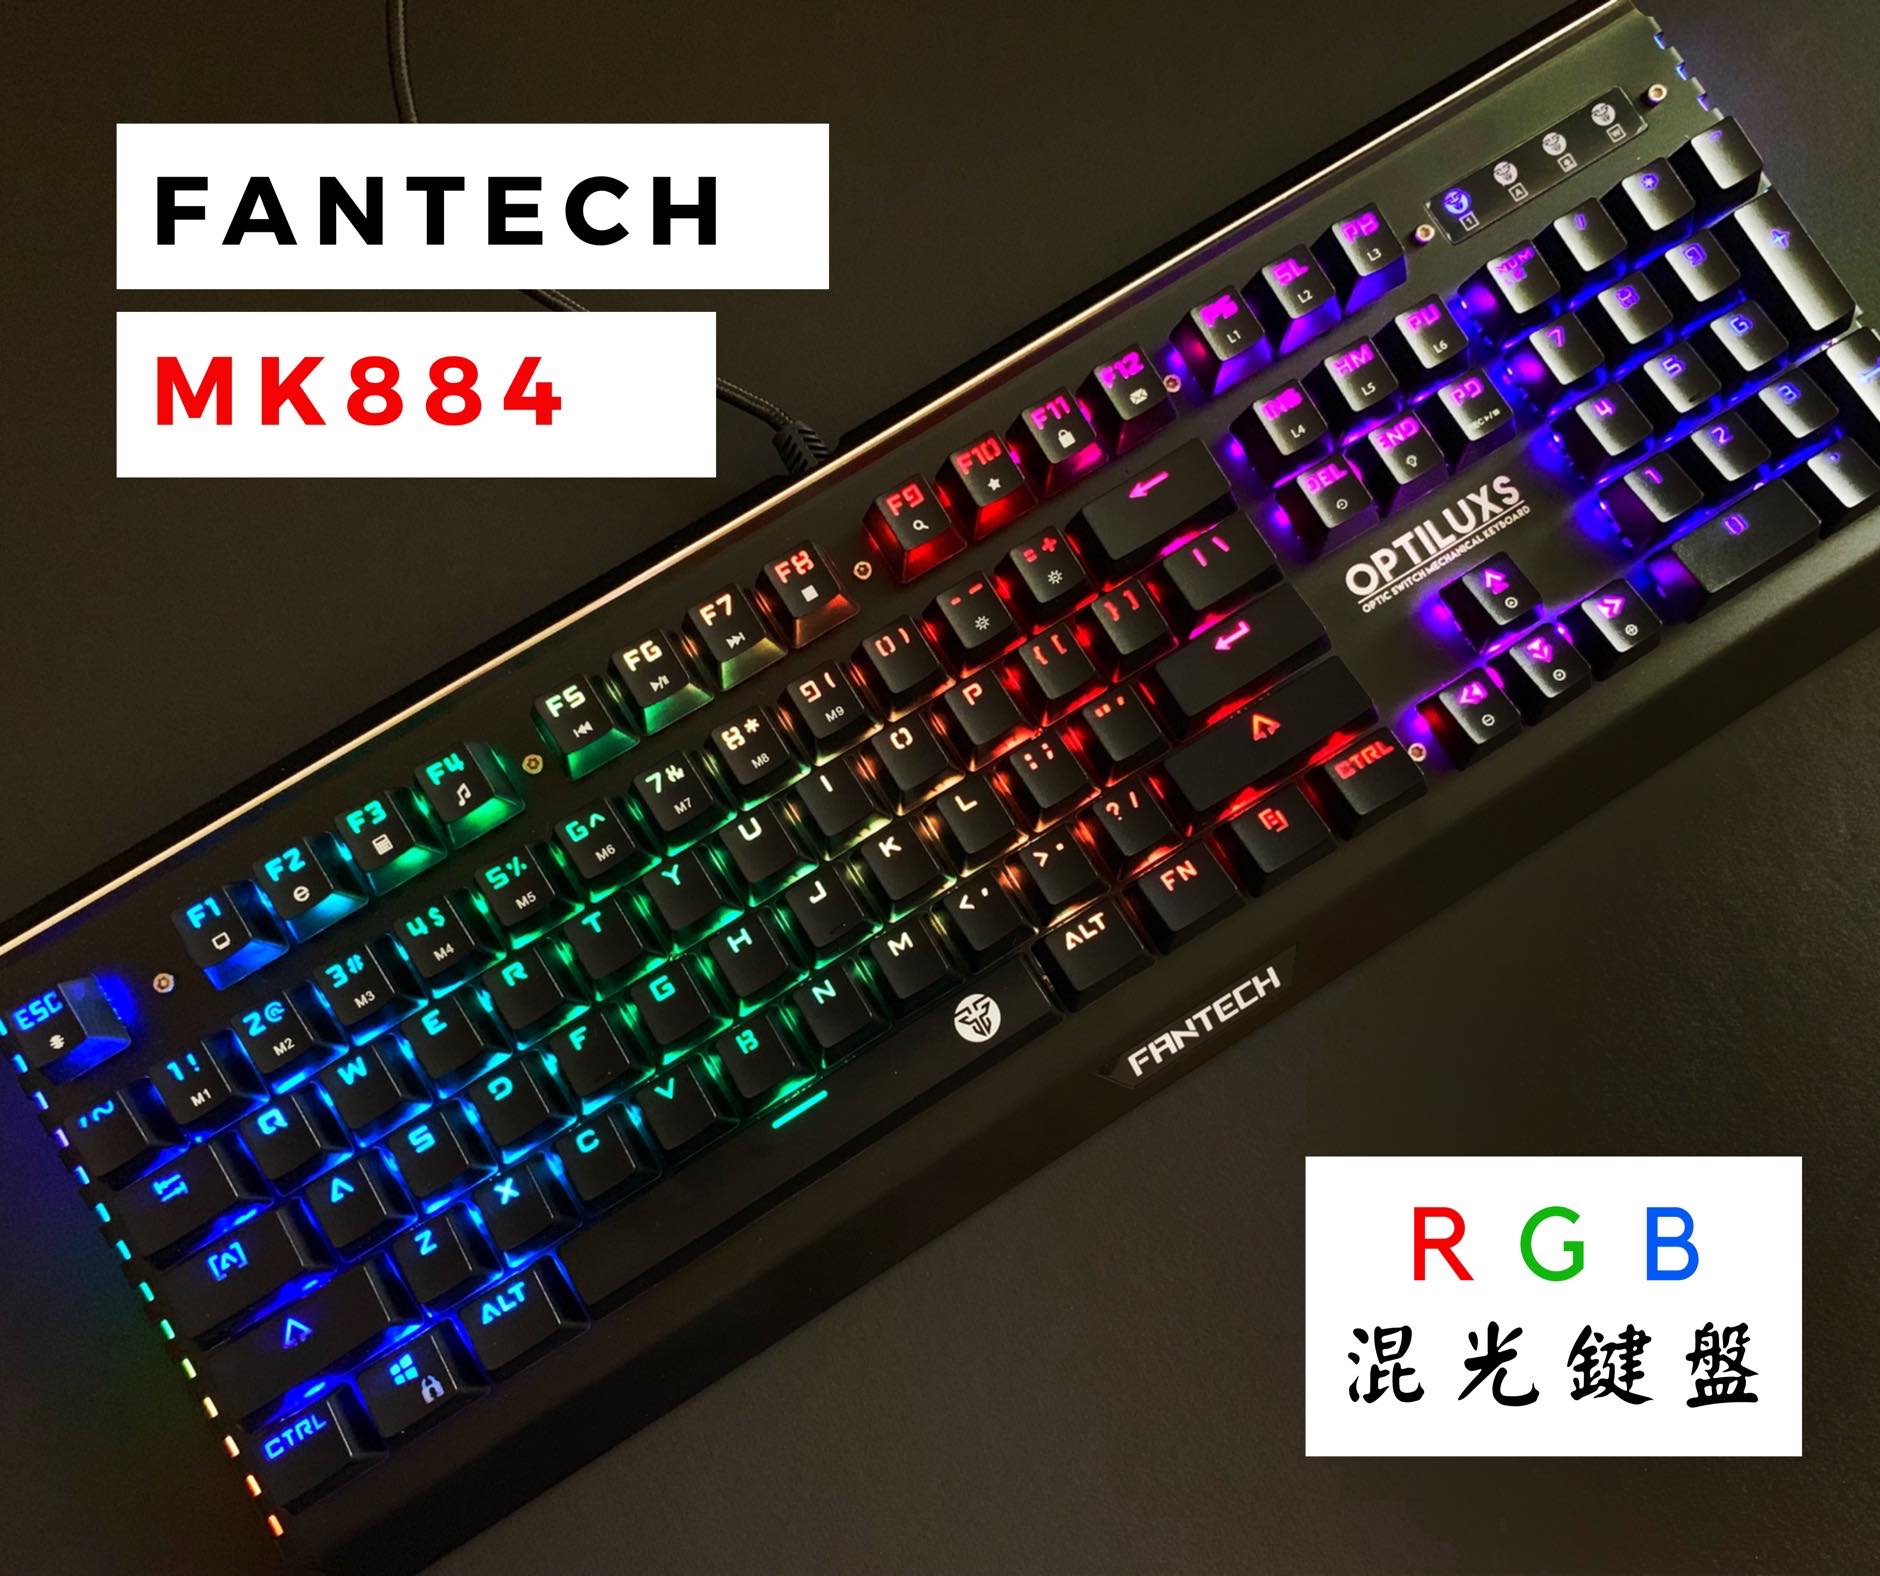 FANTECH MK884 機械式電競鍵盤 – RGB多彩燈光設計、光軸採用最新光學開關技術